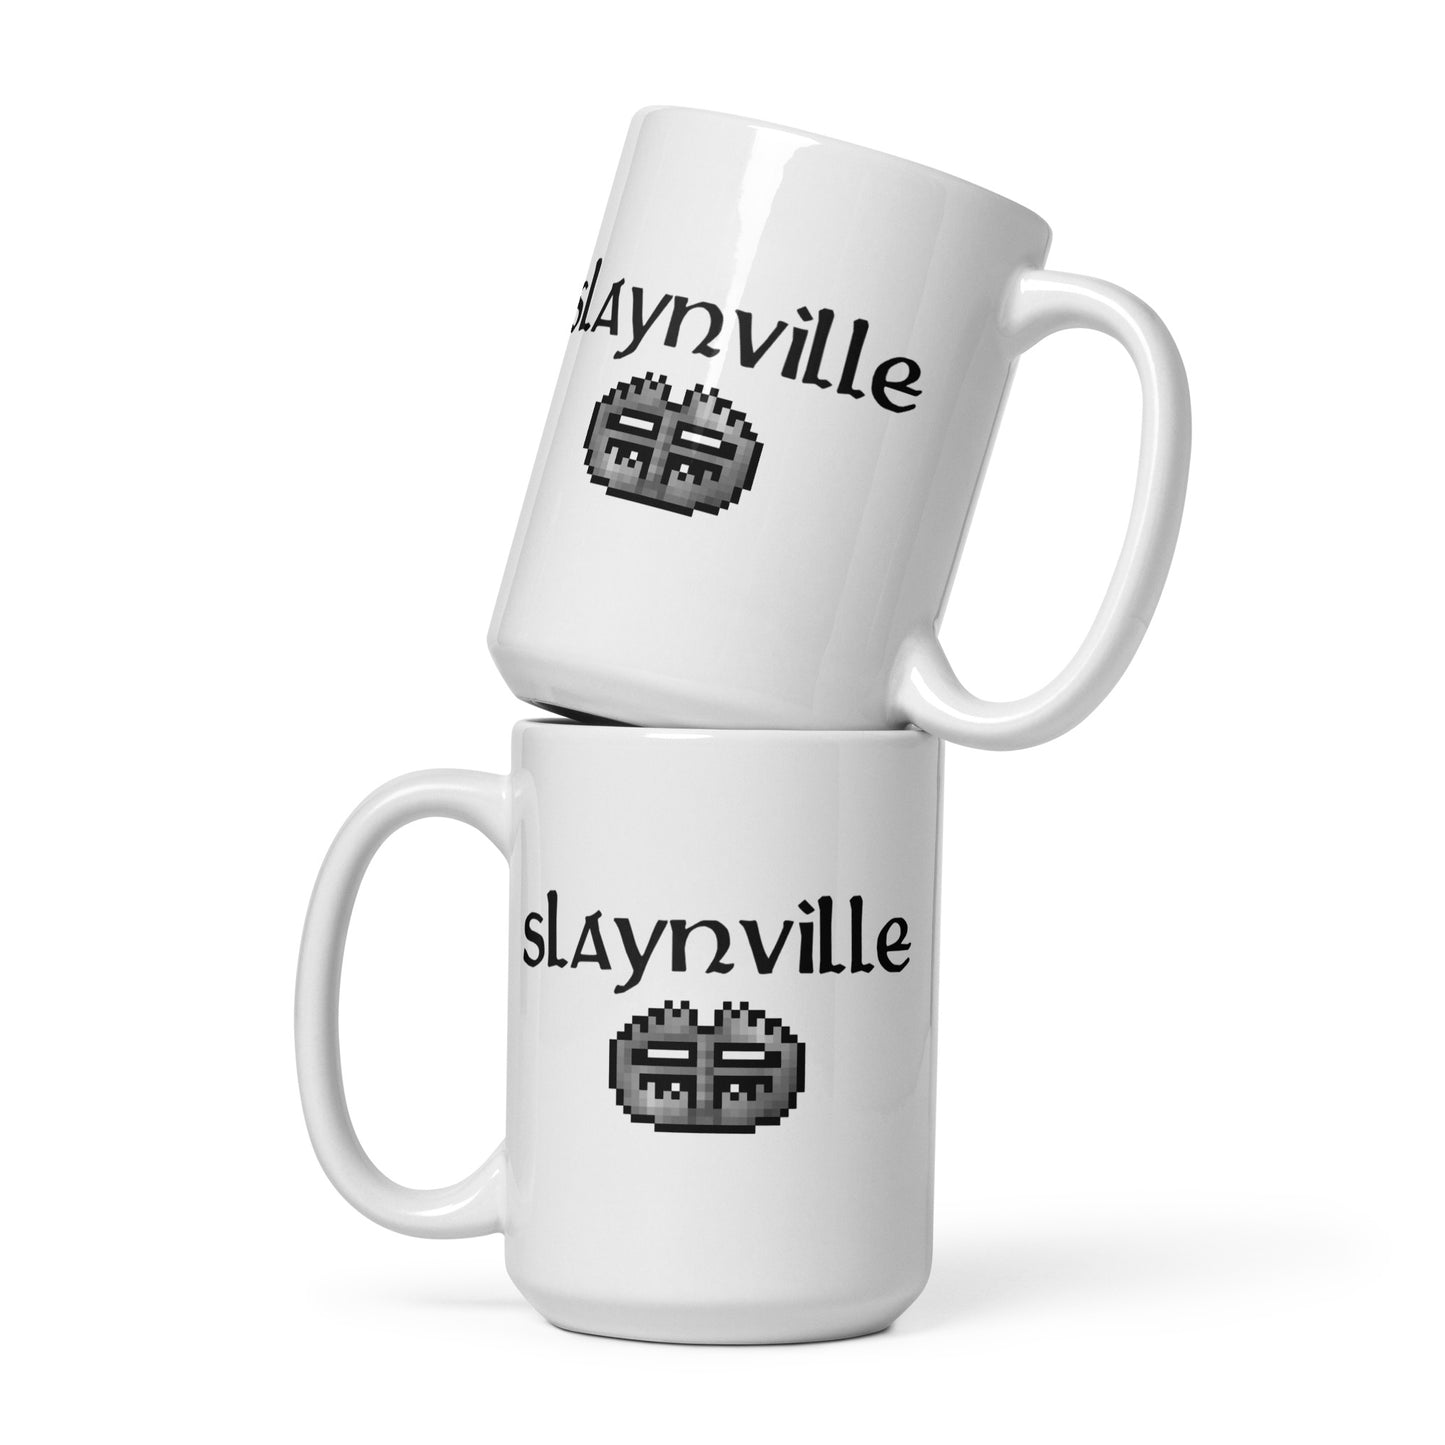 Slaynville Trap Mug